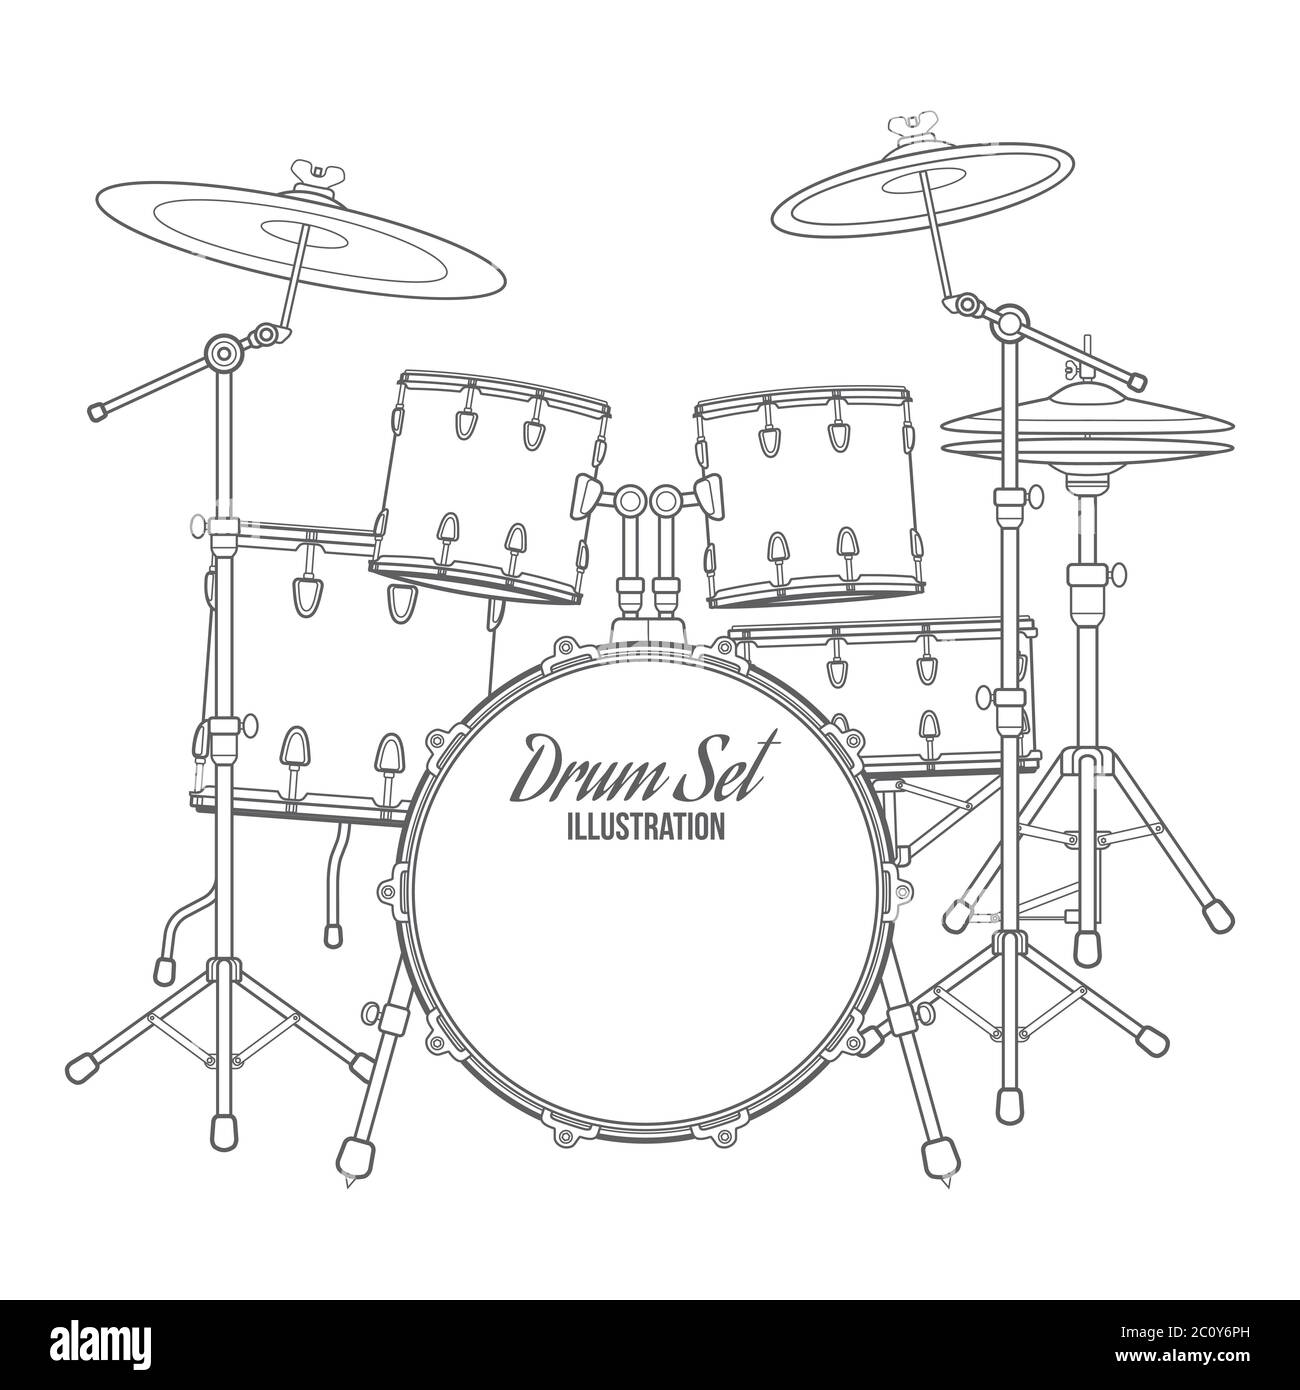 dark contour vector drum set technical illustration Stock Photo